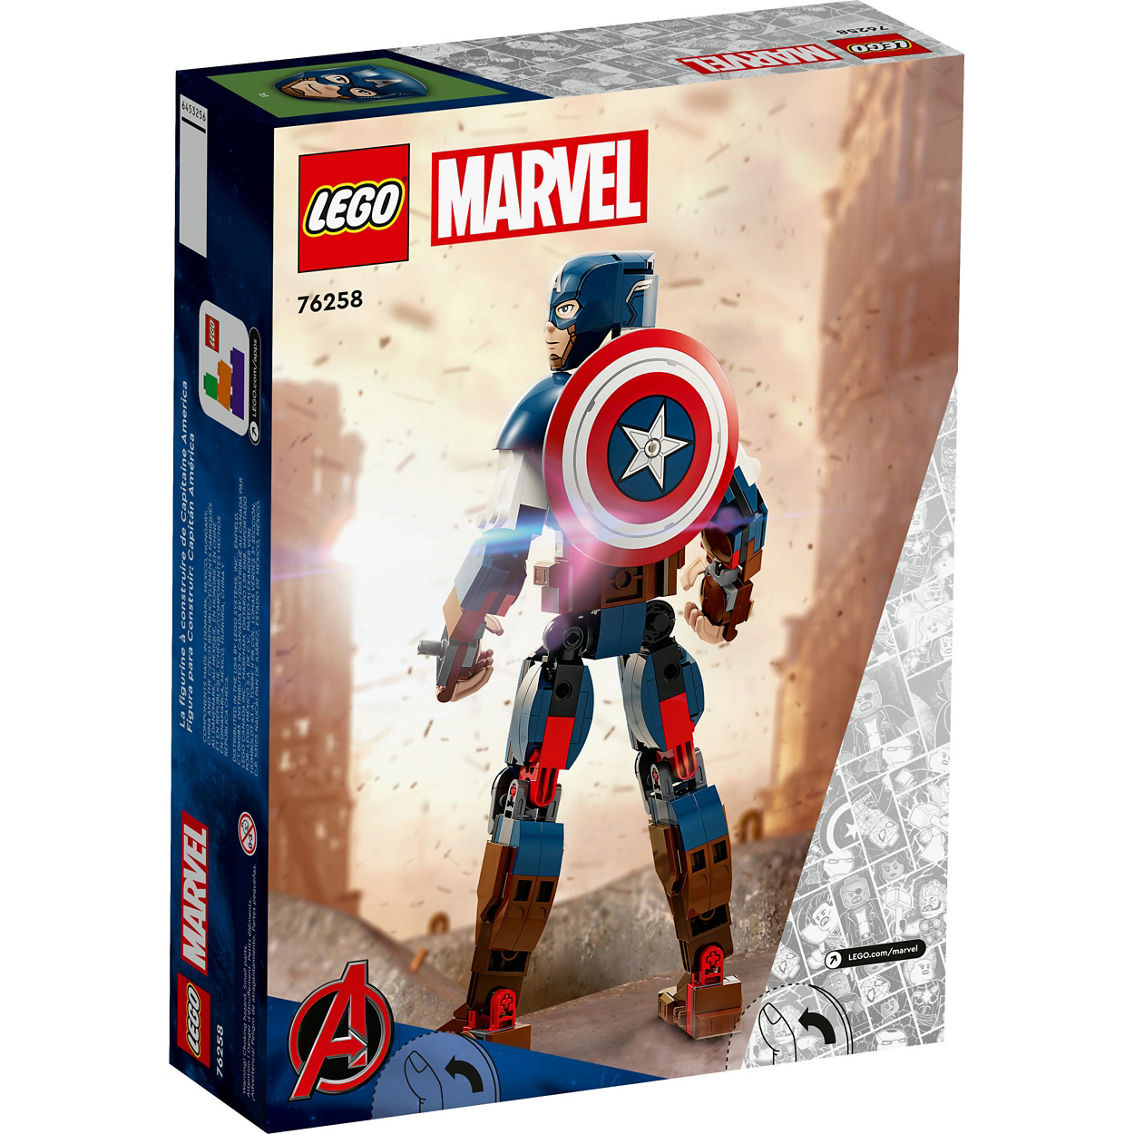 LEGO Super Heroes Captain America Construction Figure 76258 - Image 2 of 10